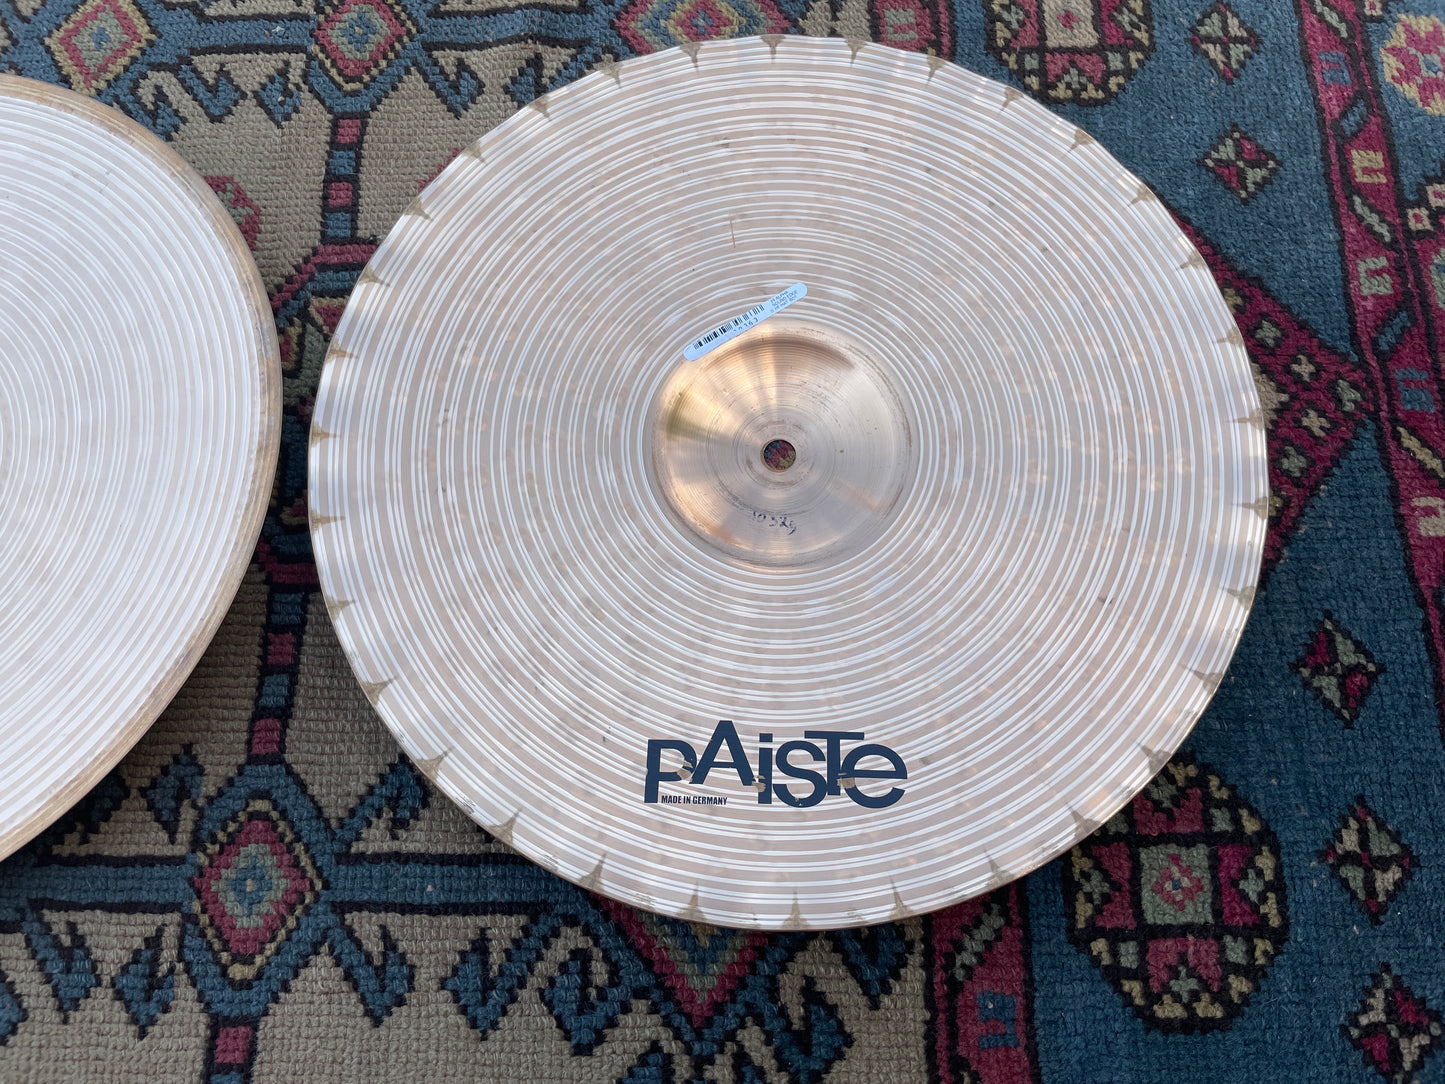 14" Paiste Alpha Sound Edge Hi-Hat Cymbal Pair 894g/1052g